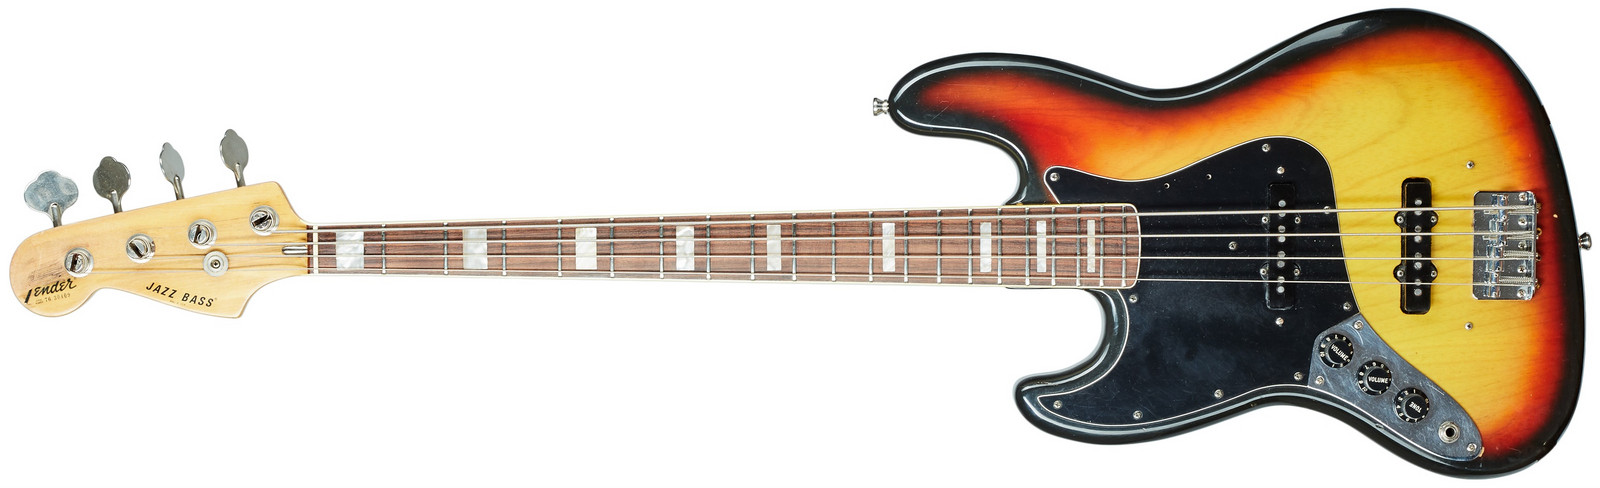 Fender 1976 Jazz Bass Lefthand